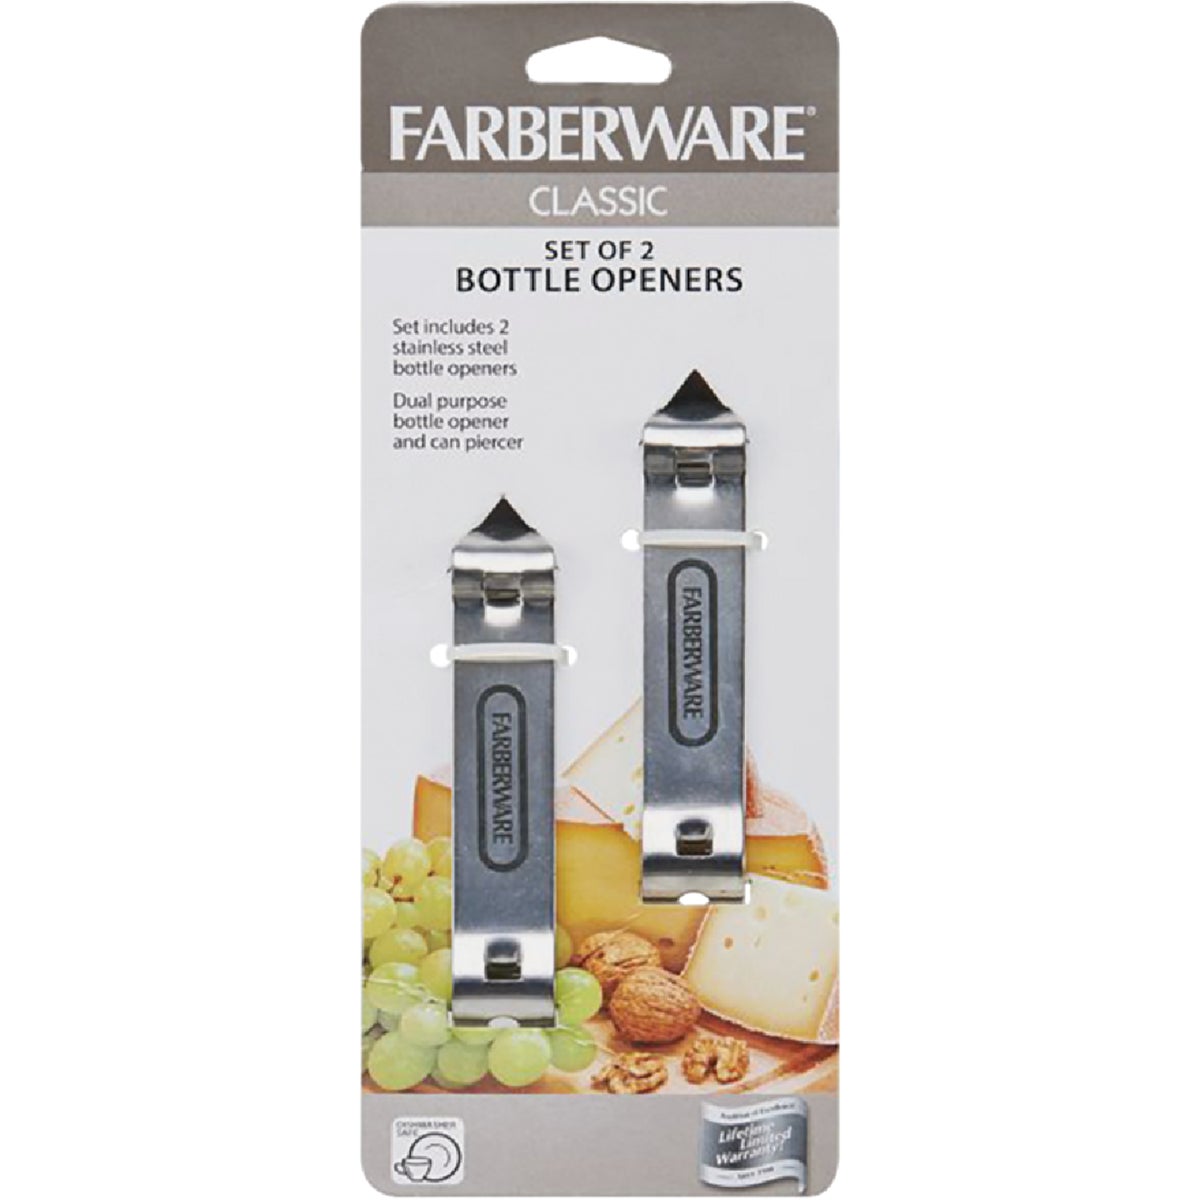 Farberware Stainless Steel Bottle Openers (2 Count)